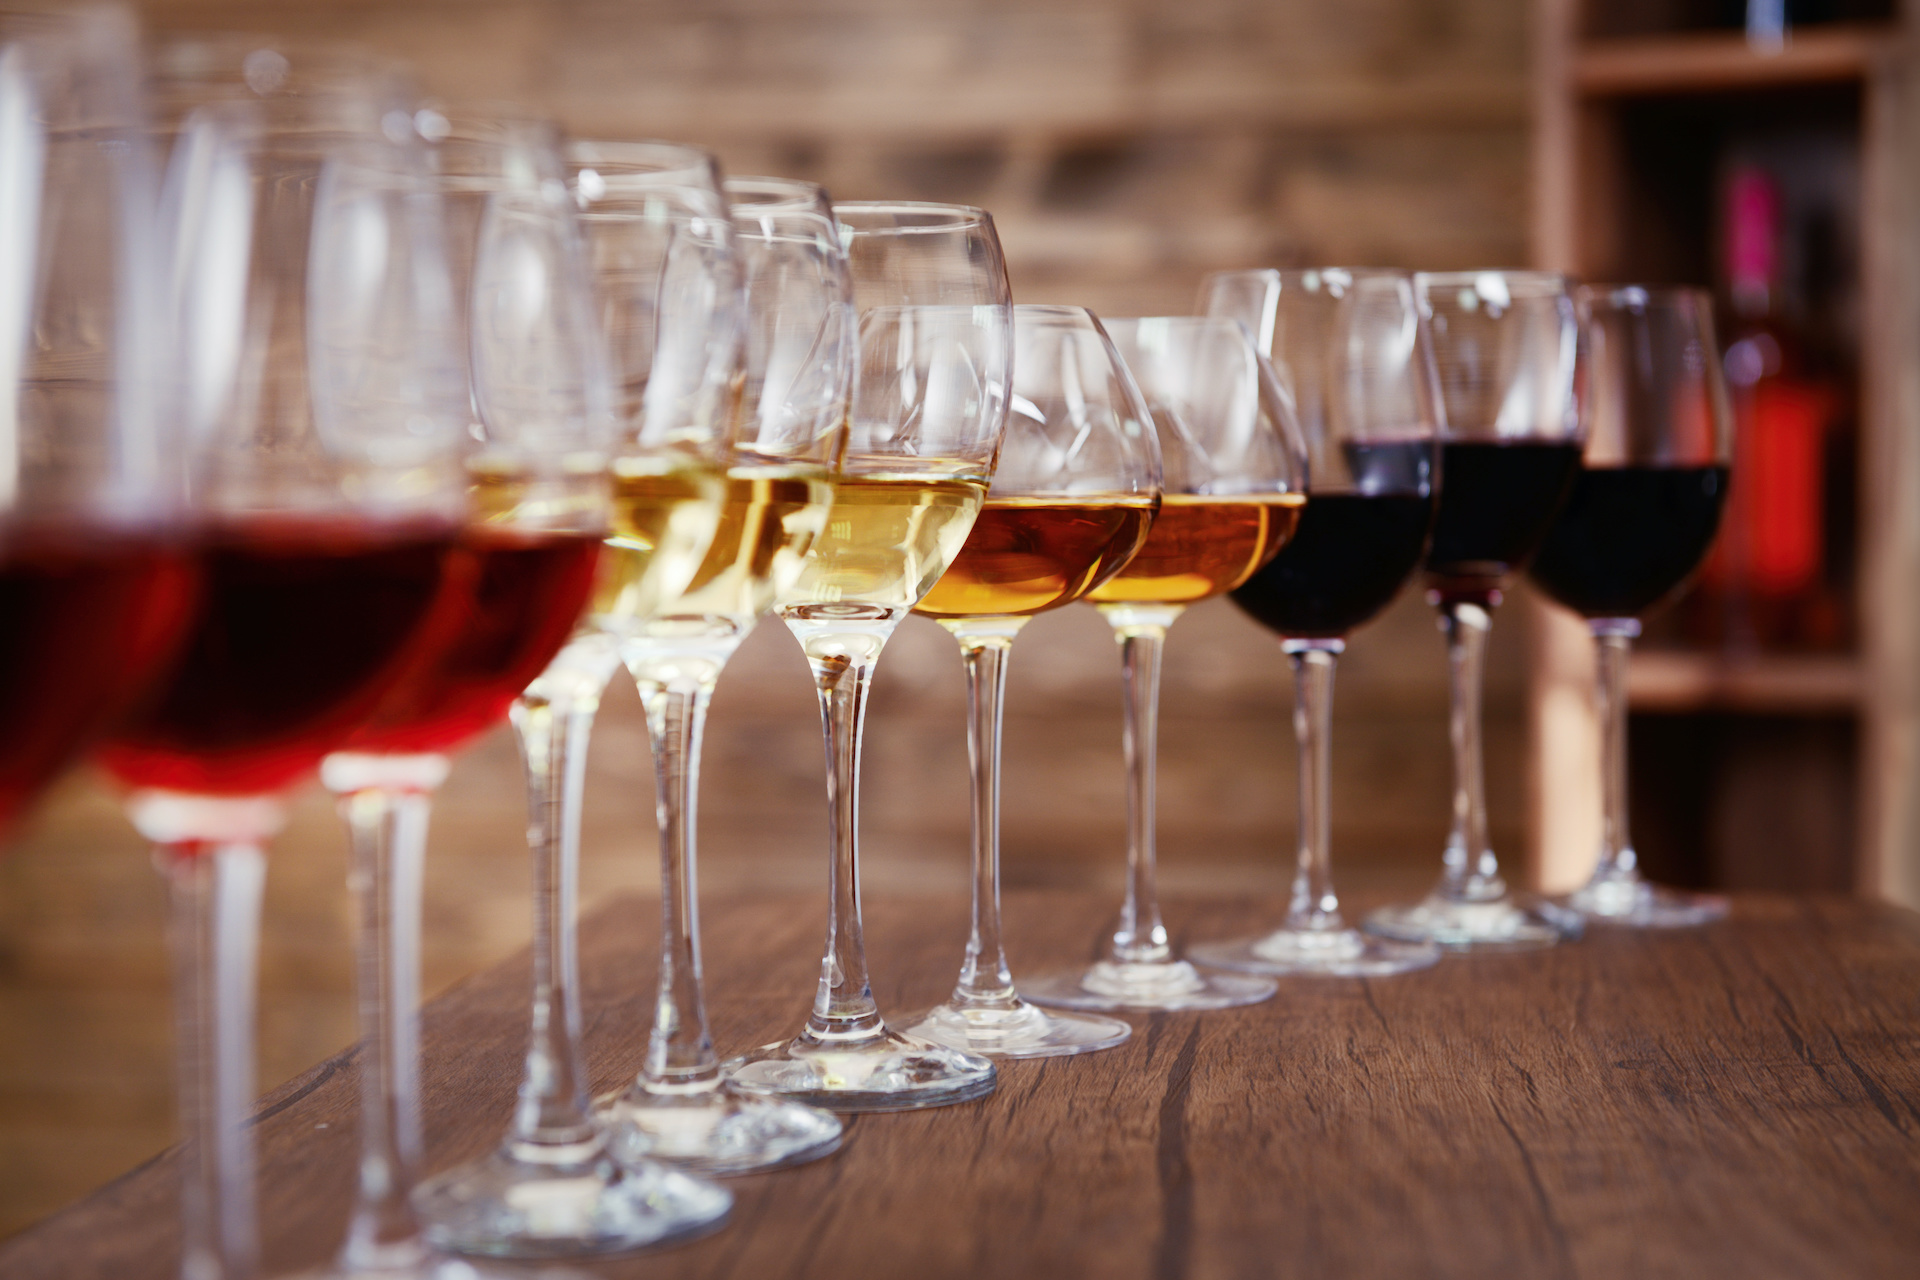 Varied wine glasses